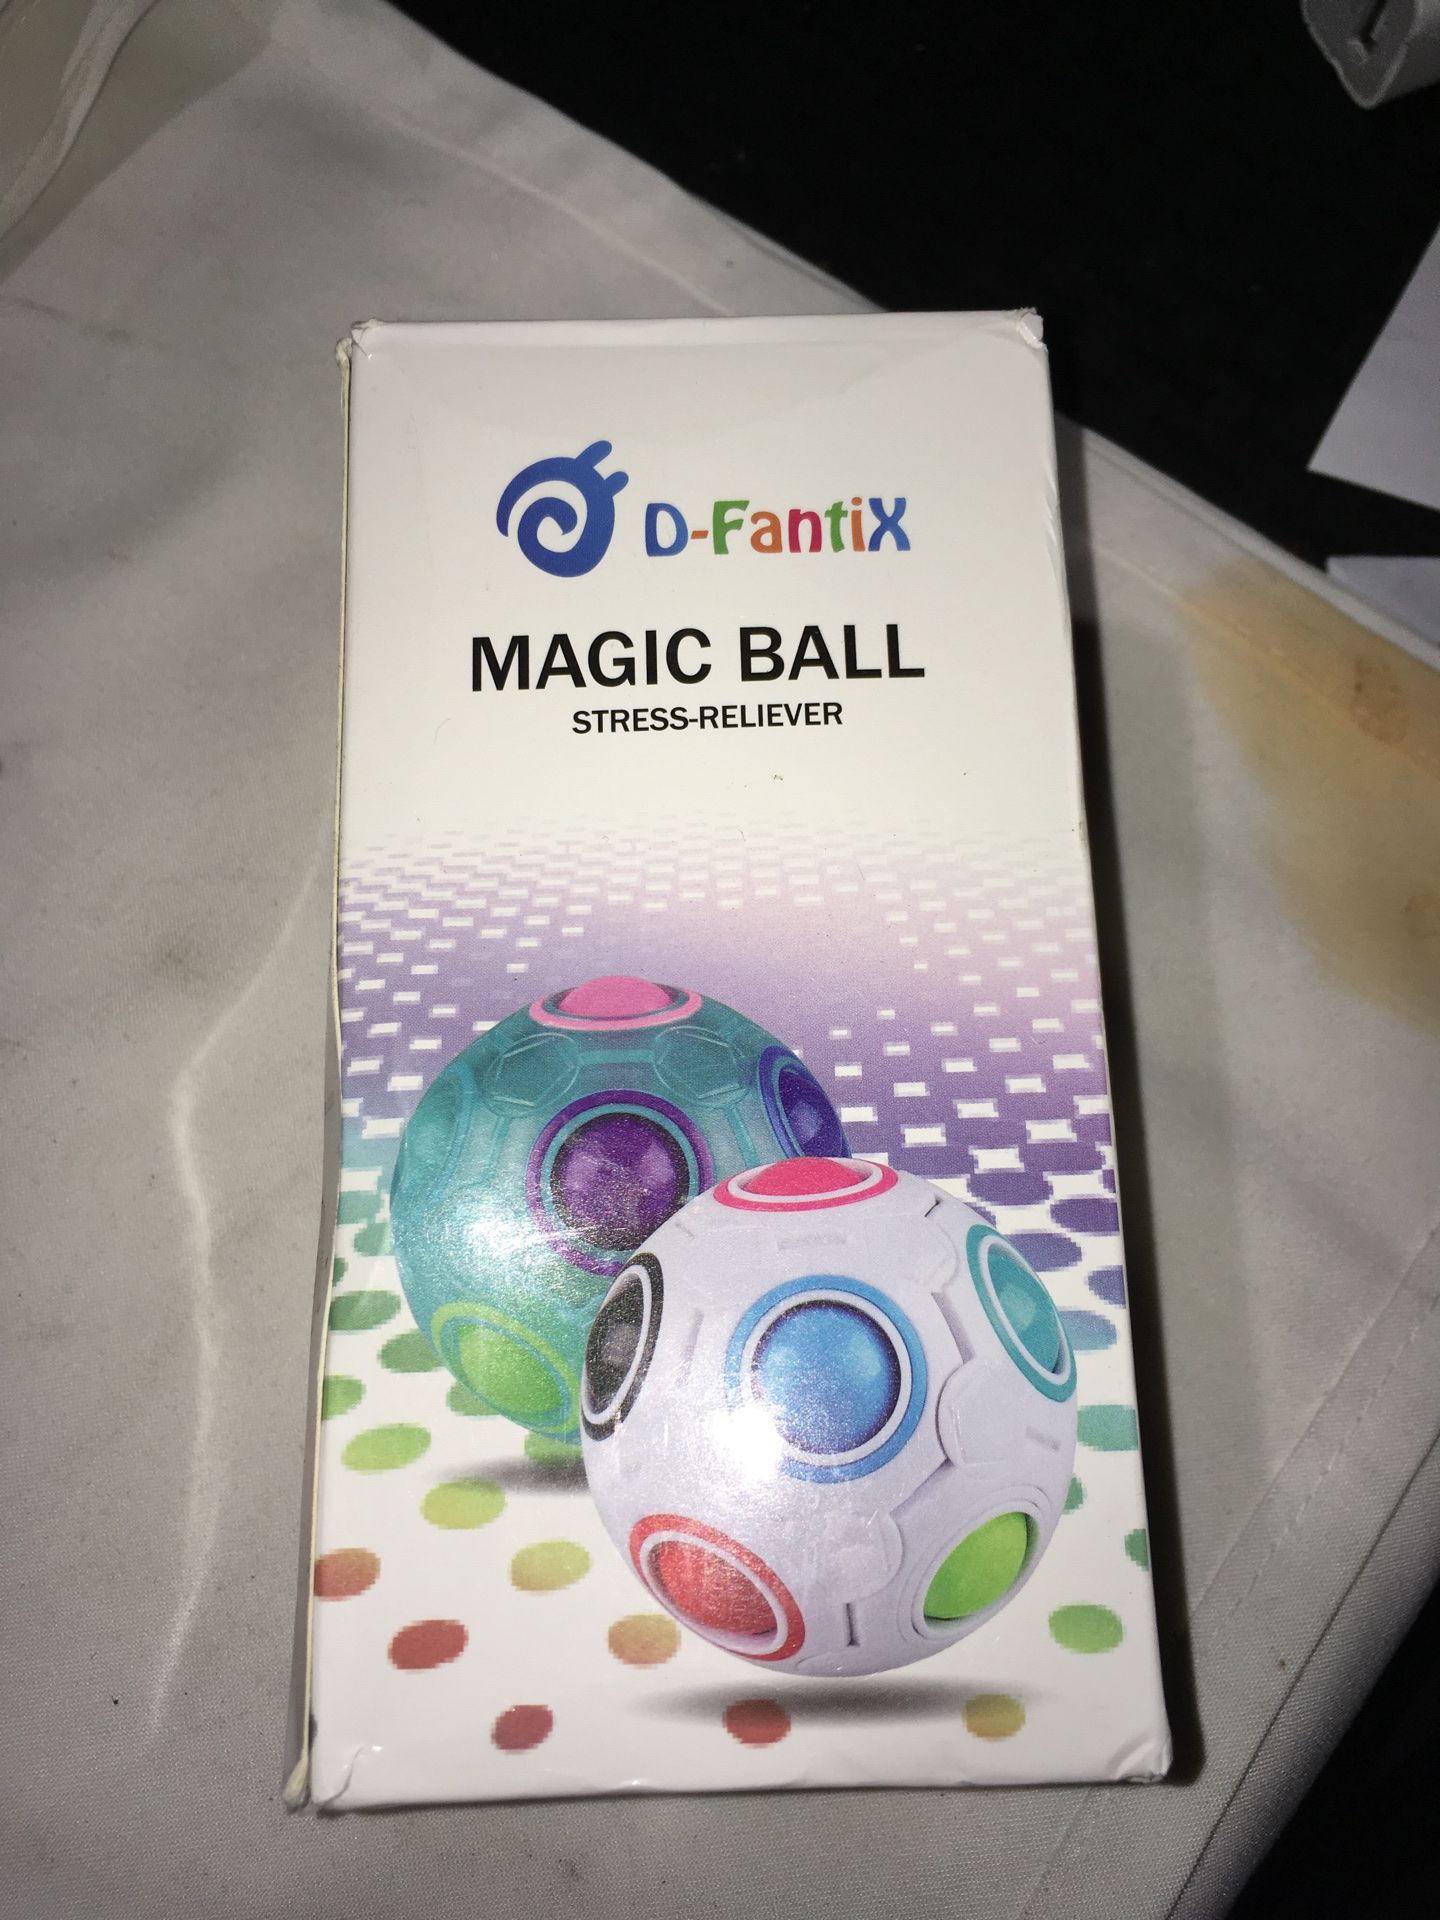 Magic ball stress reliever